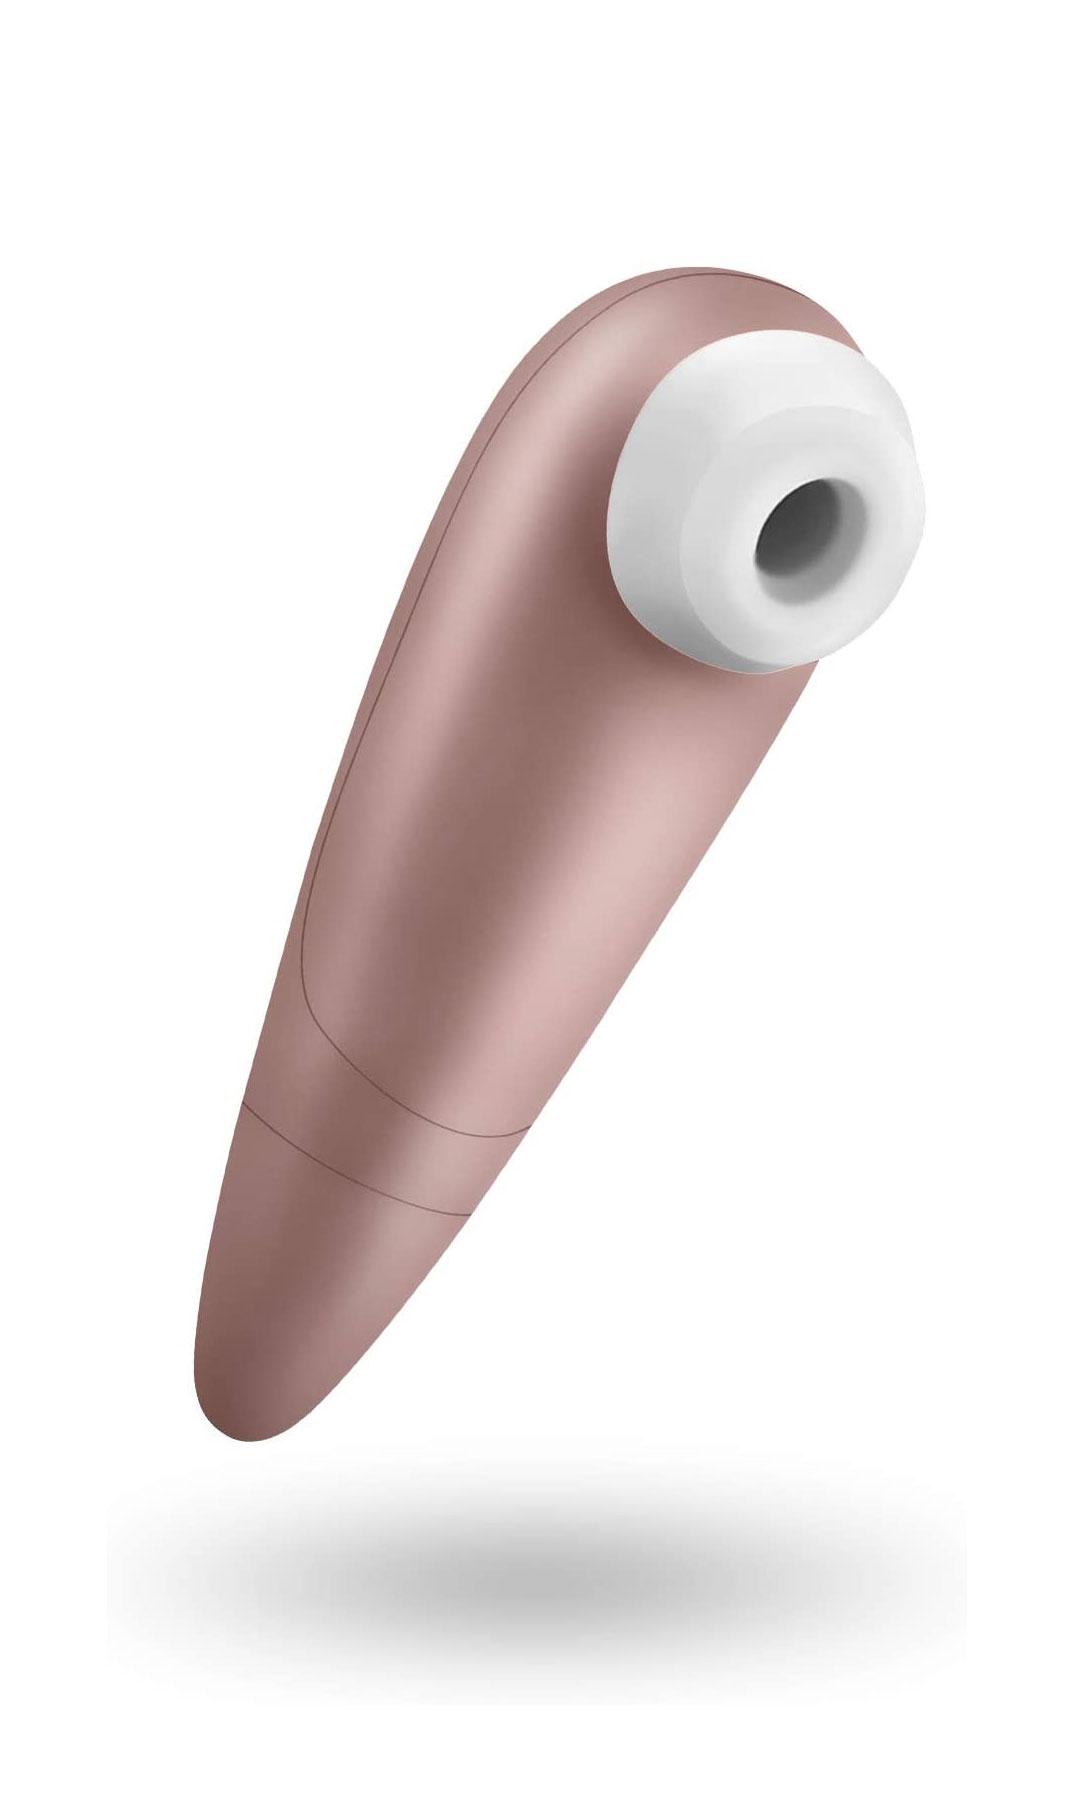 Satisfyer Number One Next Generation Vibrator, Pink, 14 cm